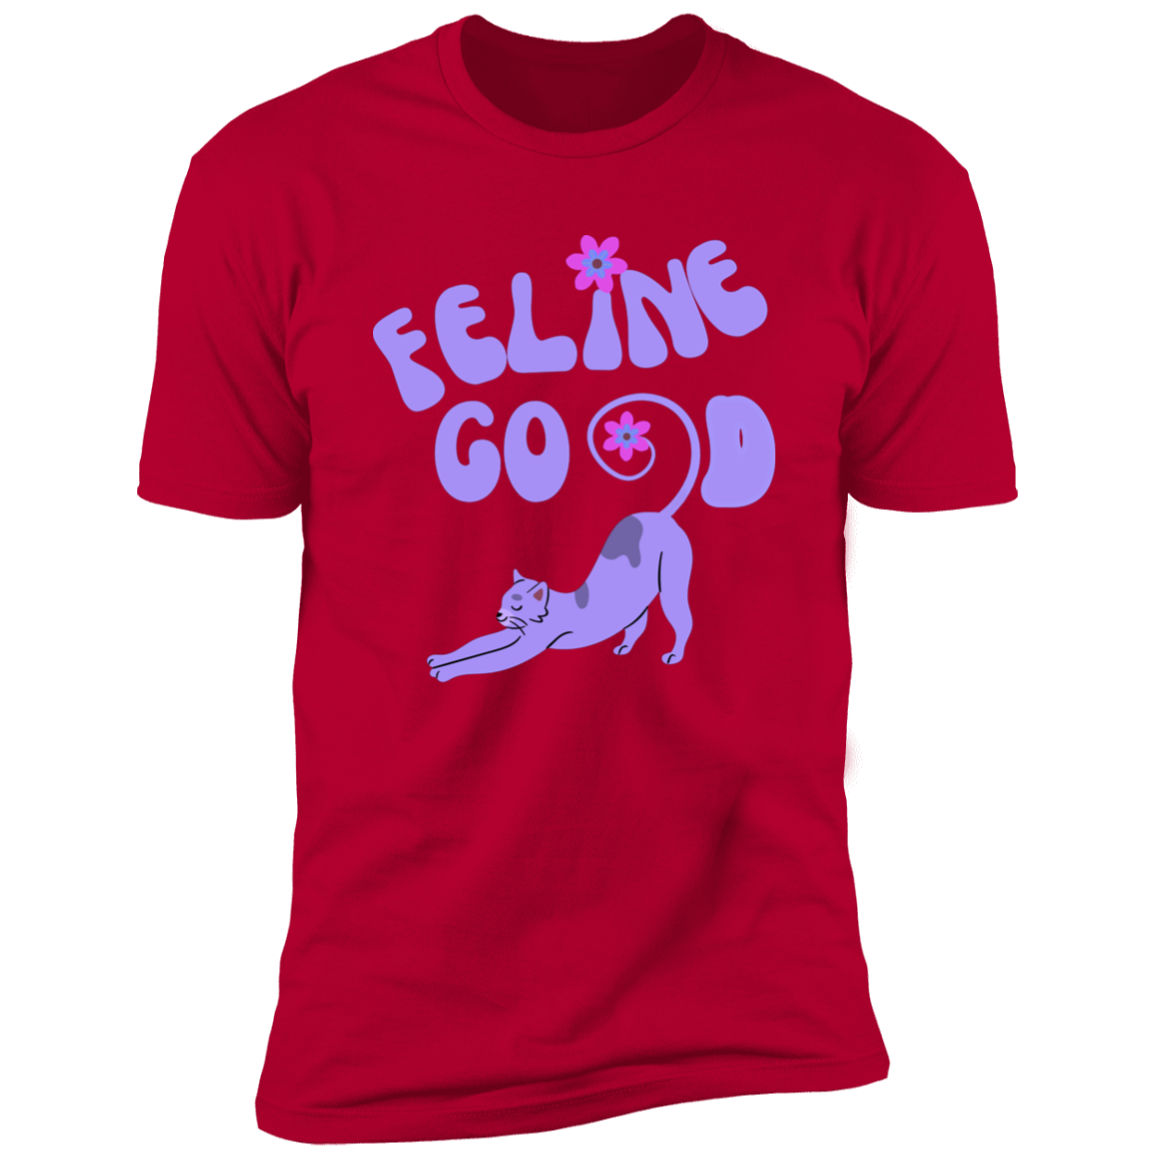 Feline Good Cat T-Shirt, Cat Shirt for humans, in red